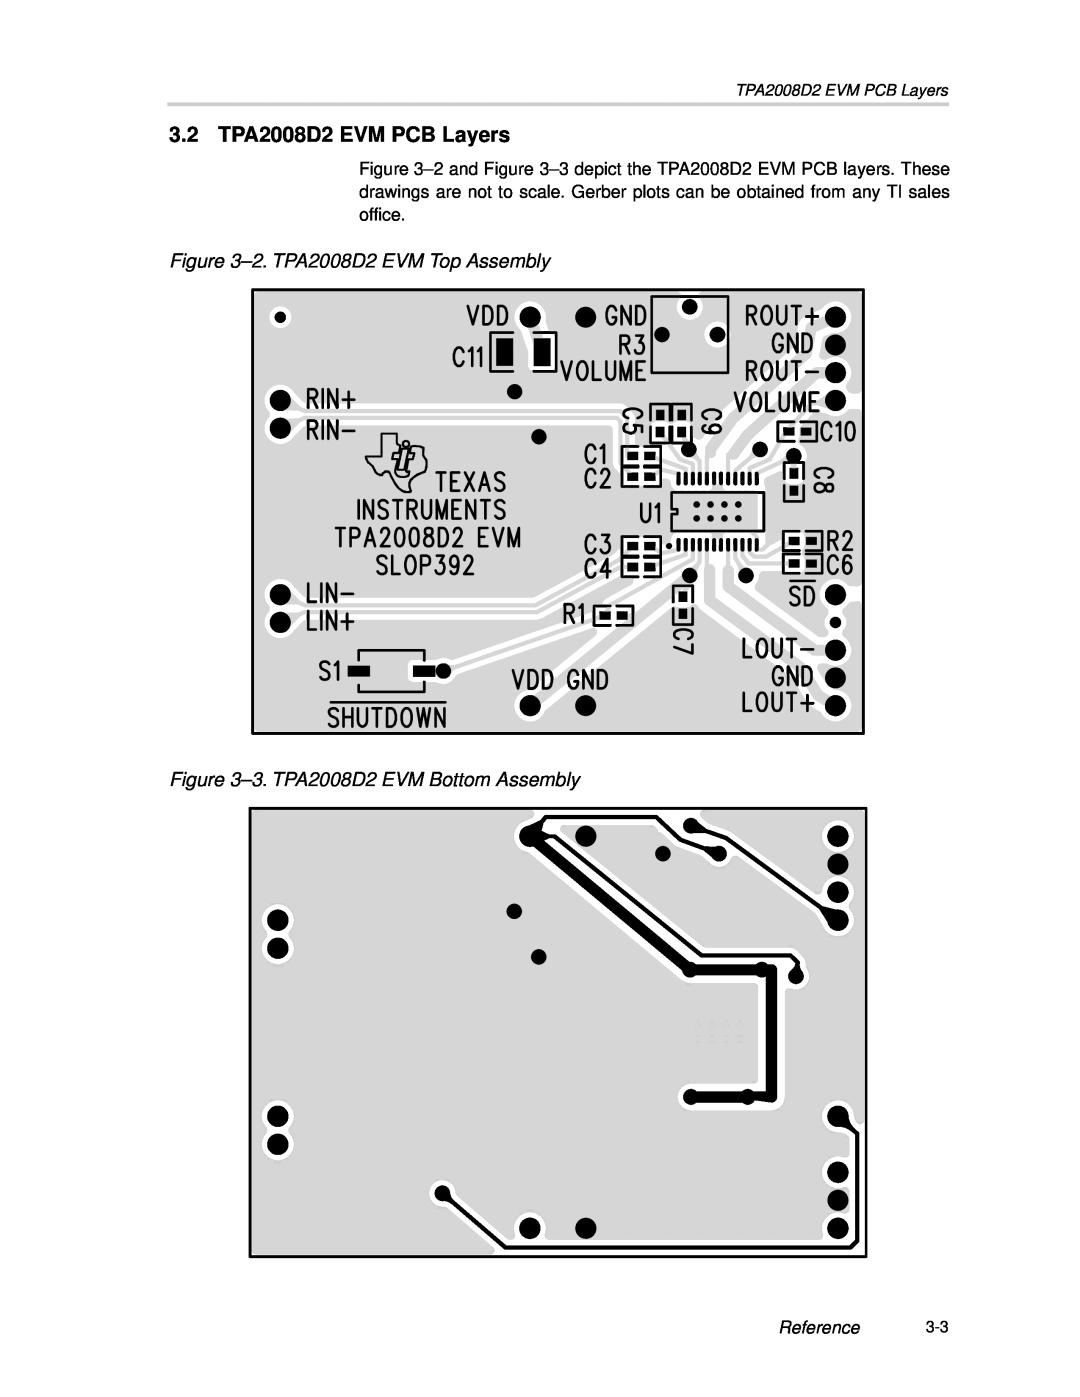 Texas Instruments manual 3.2 TPA2008D2 EVM PCB Layers, 2.TPA2008D2 EVM Top Assembly, 3.TPA2008D2 EVM Bottom Assembly 